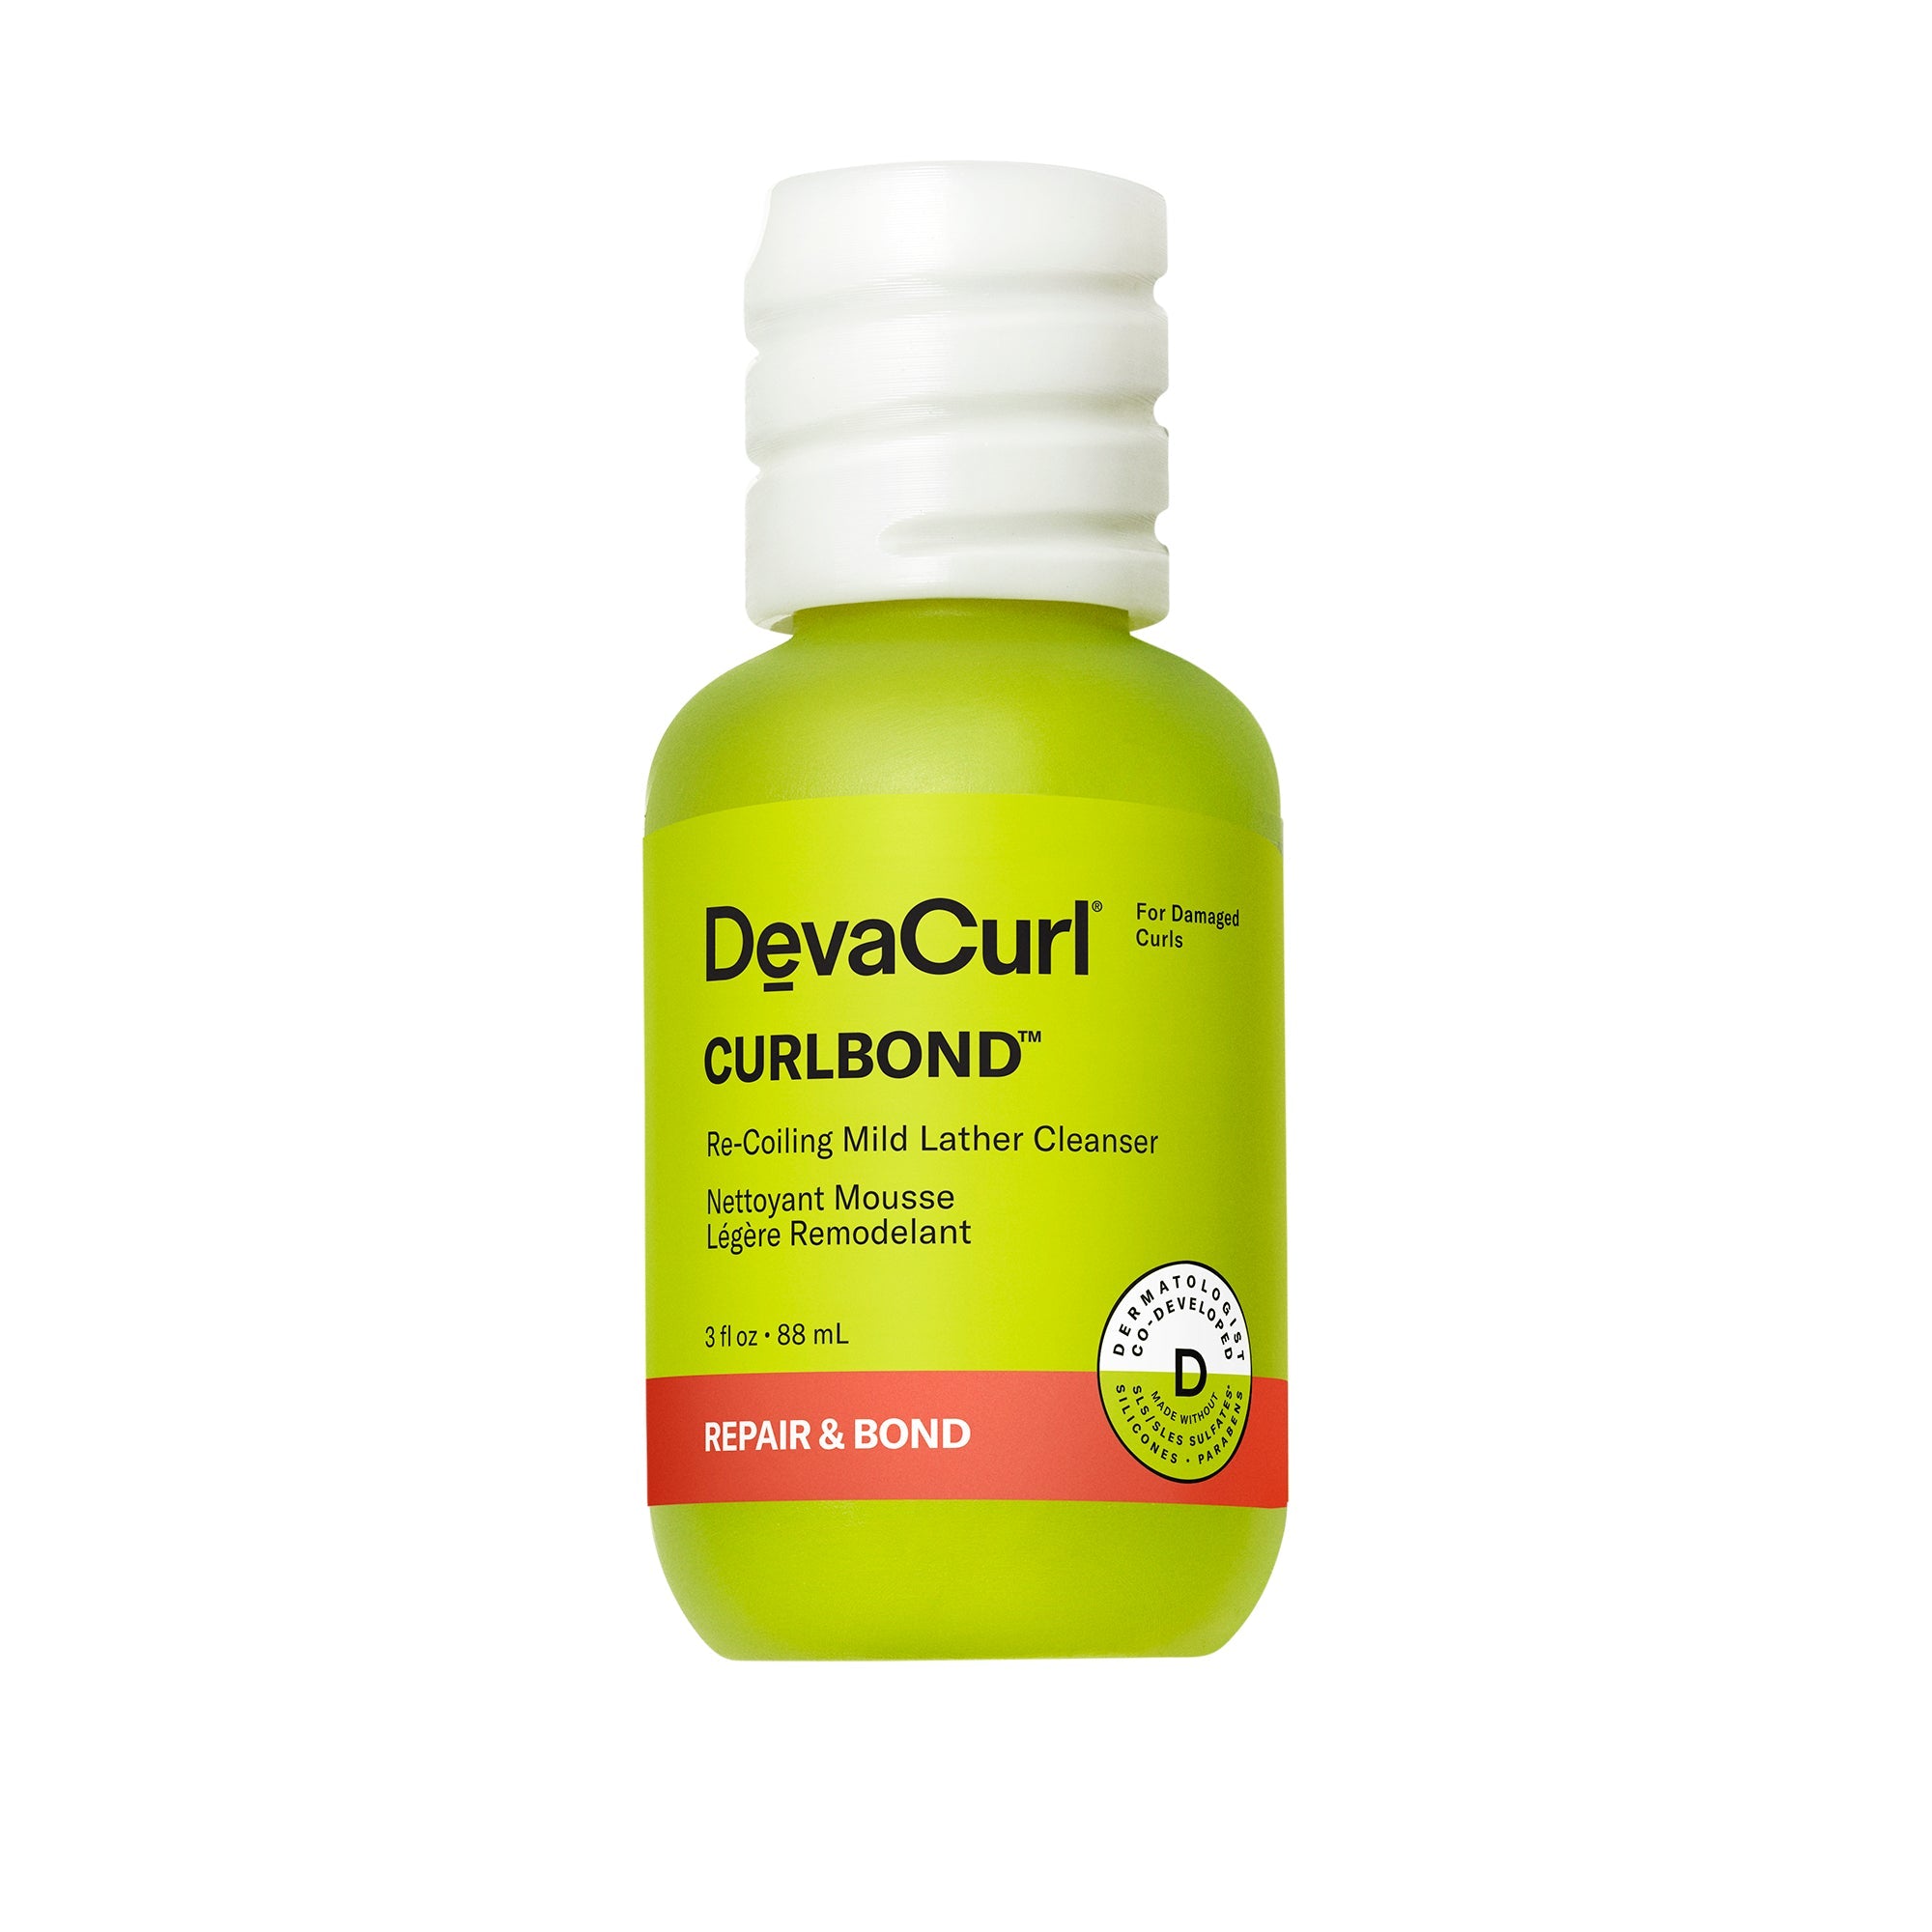 DevaCurl CurlBond Cleanser-Deva Curl Products-ellënoire body, bath fragrance & curly hair